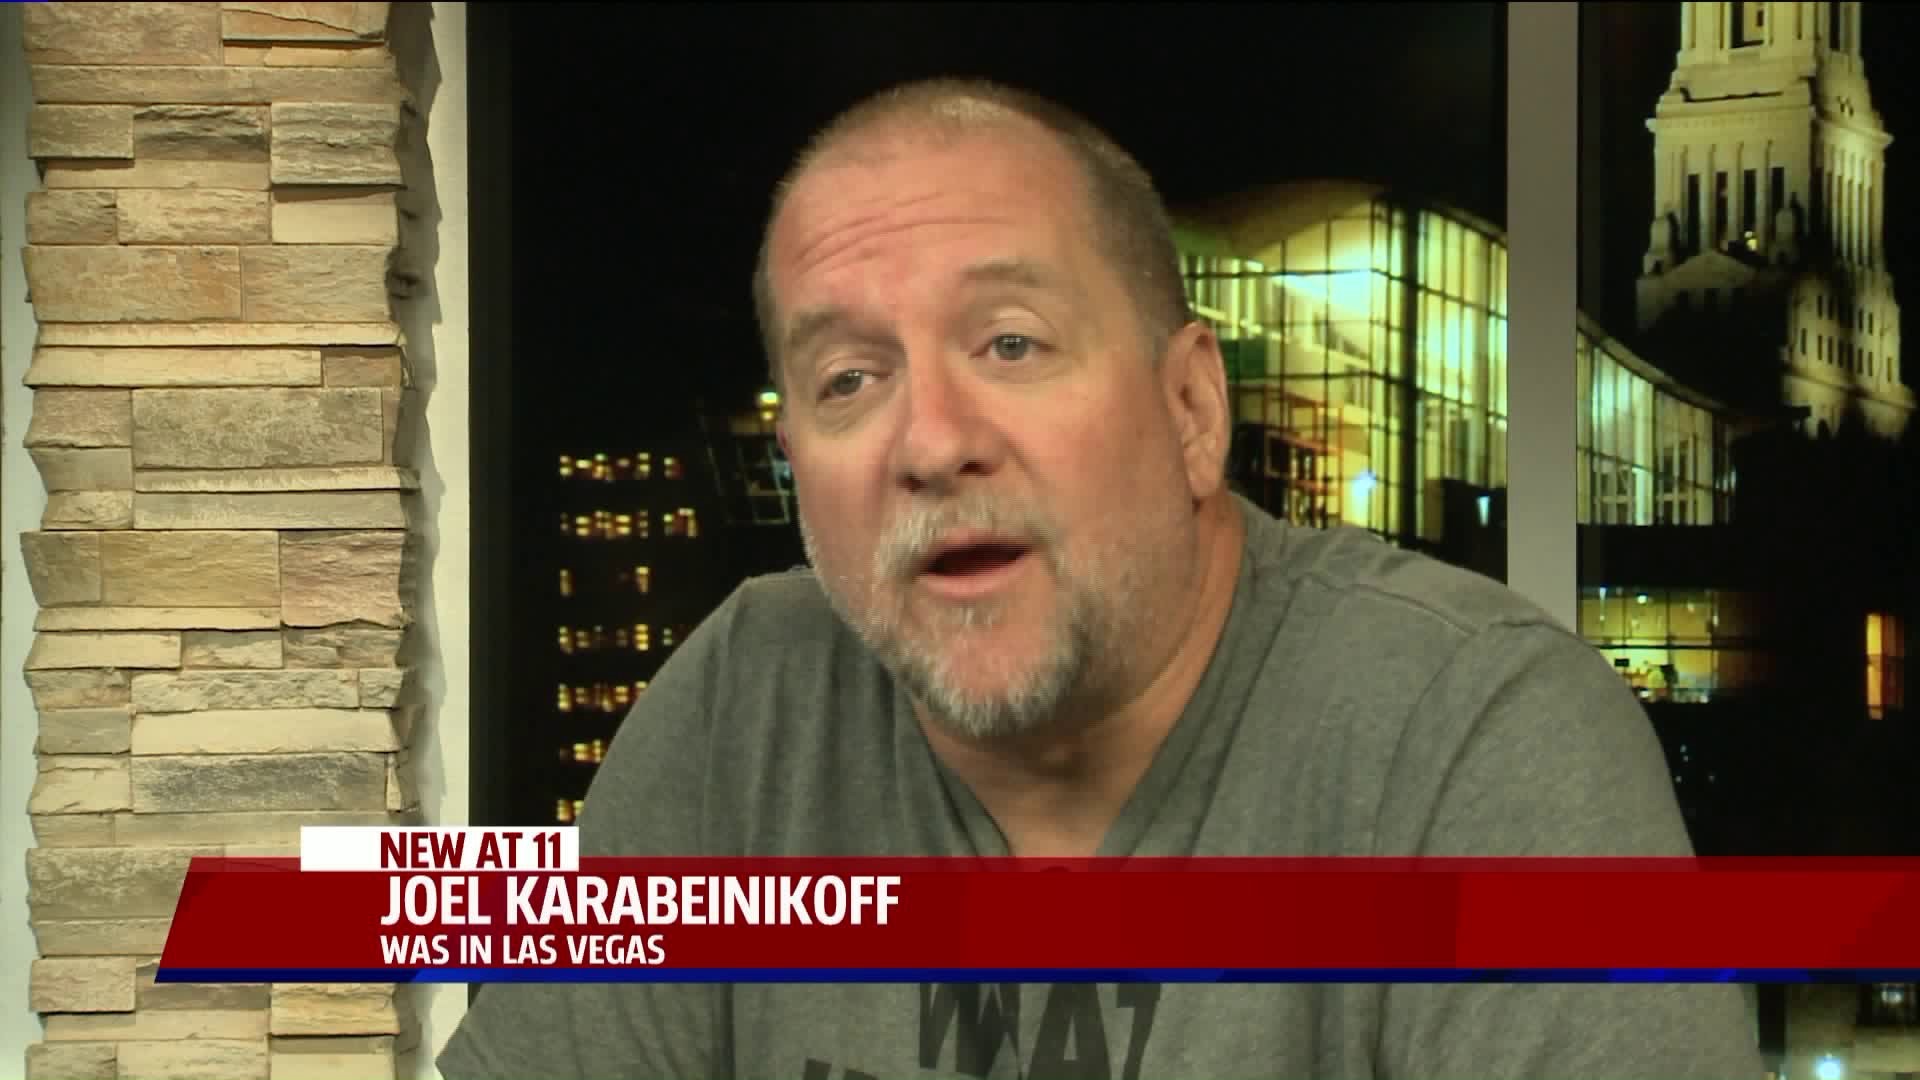 CT resident tells his story of Las Vegas shooting